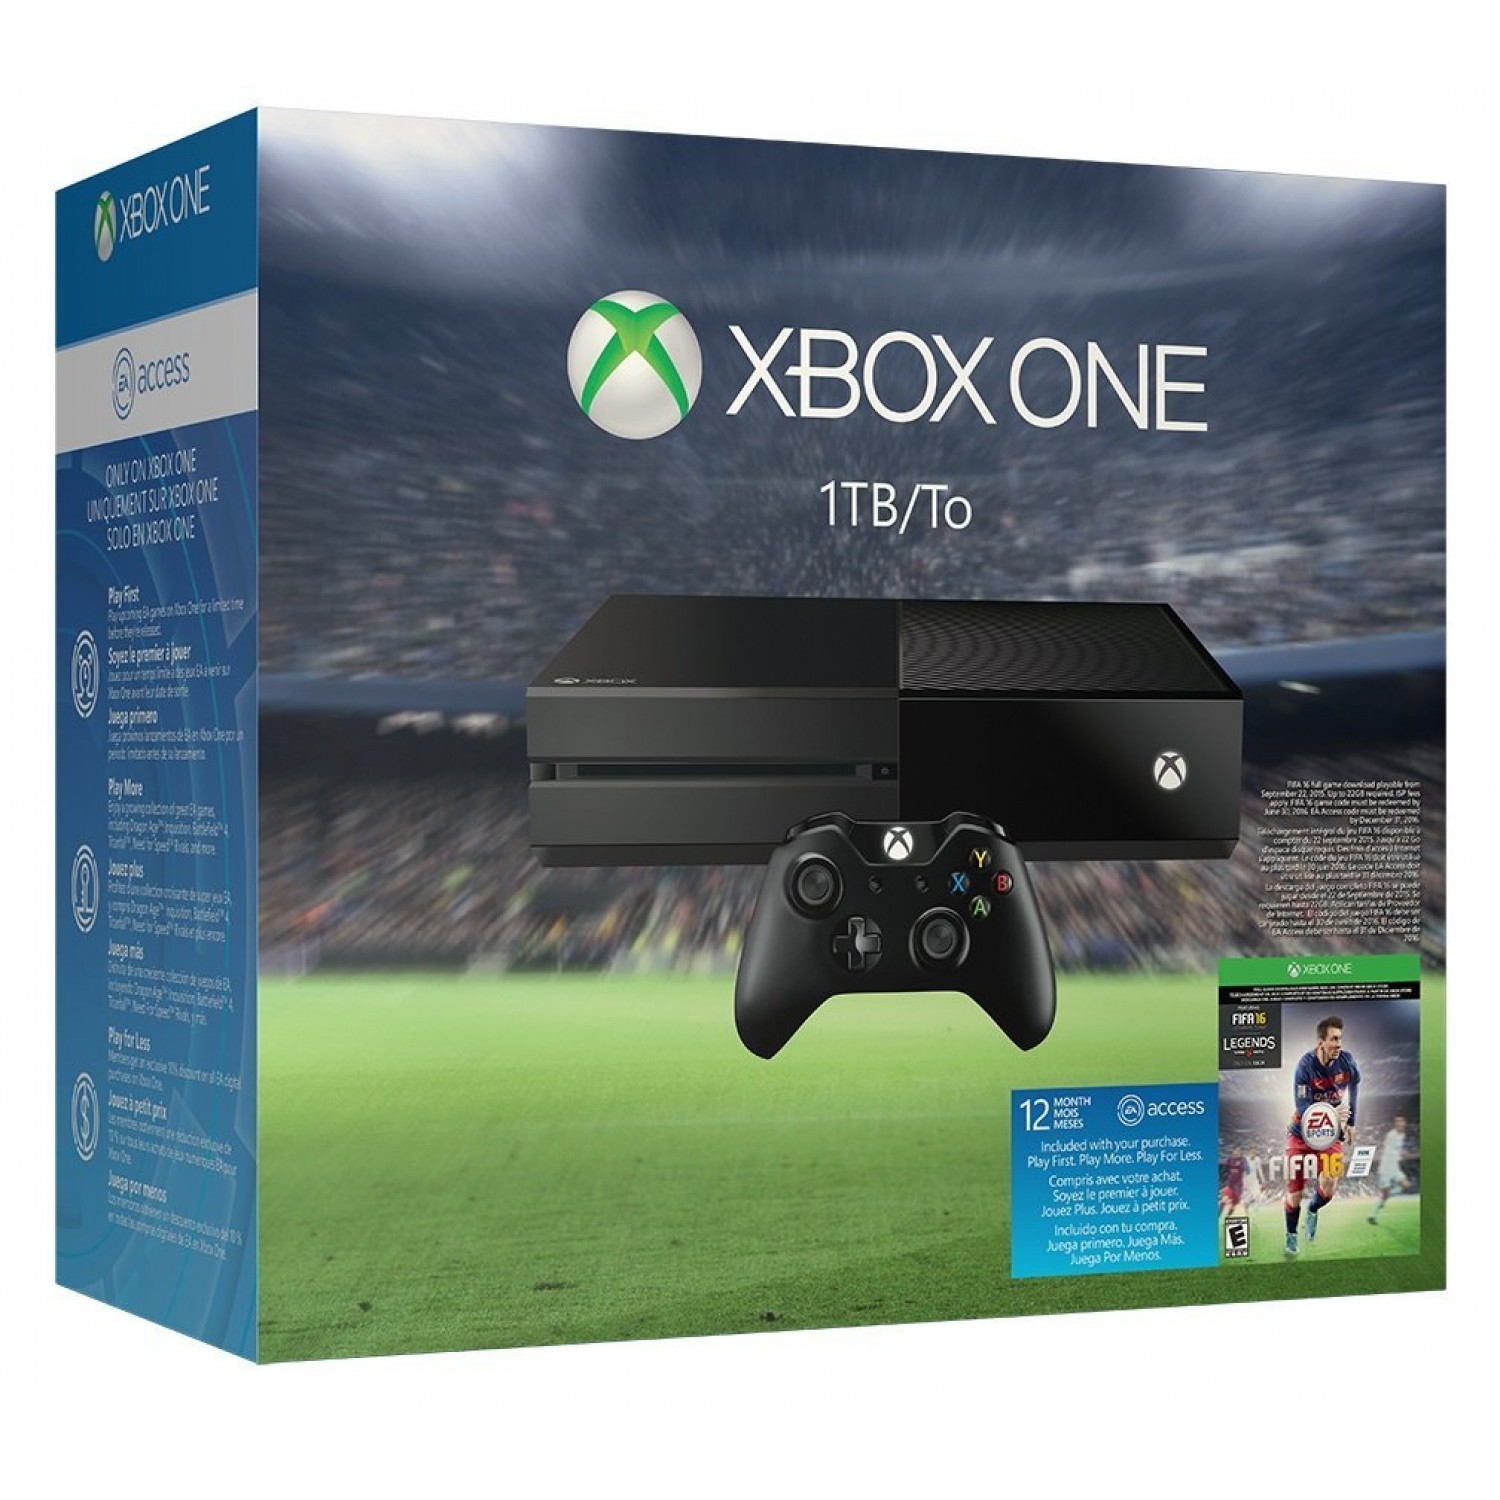  Xbox One Fifa 16 Bundle